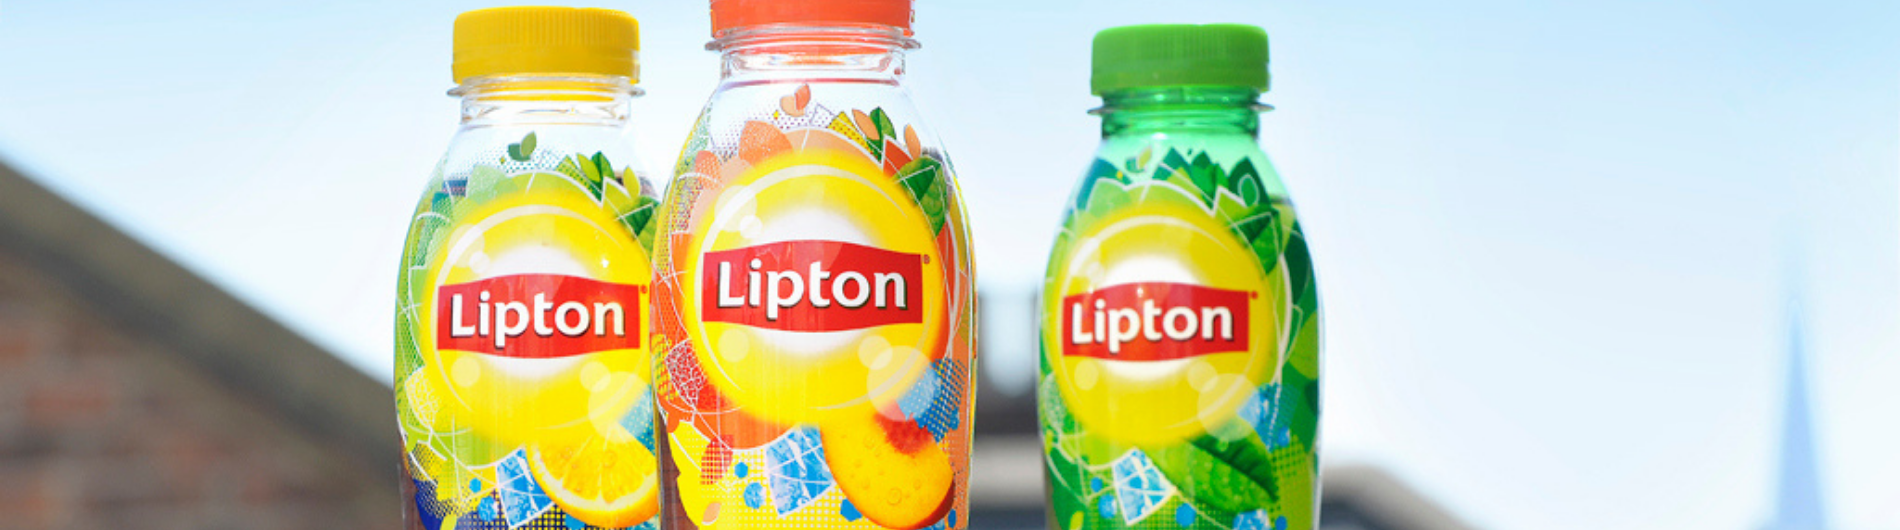 Unilever-Lipton